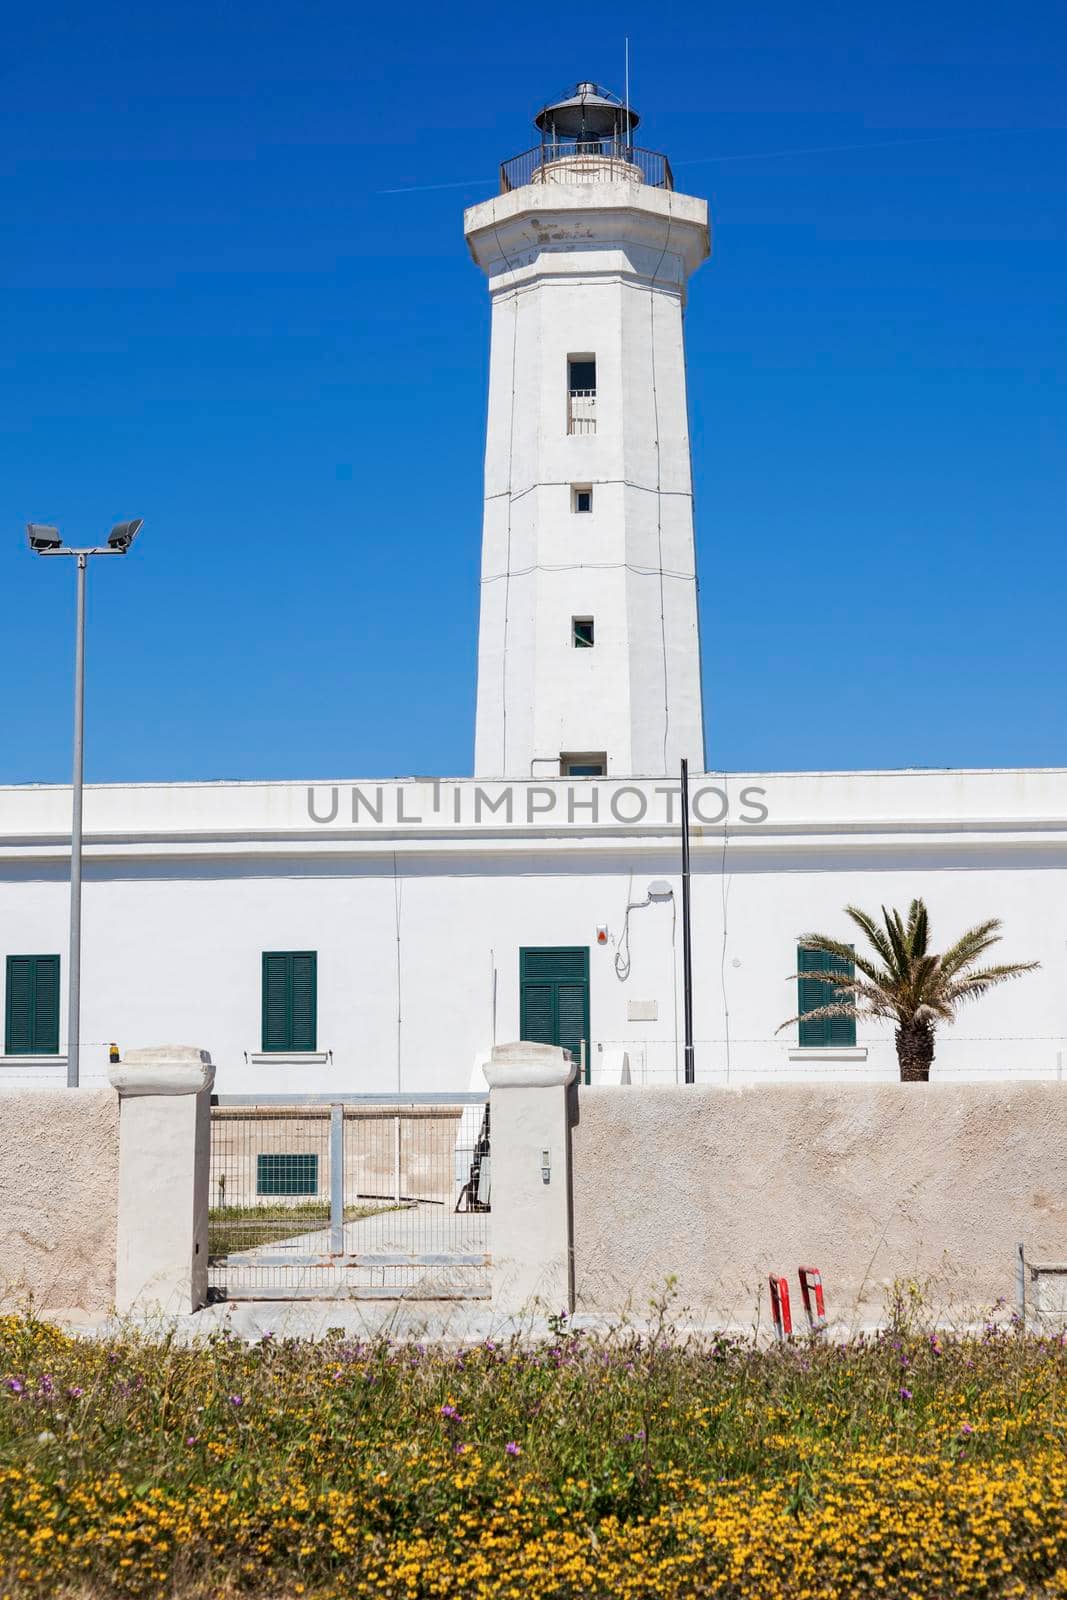 Lighthouse in San Cataldo. San Cataldo, Apulia, Italy.